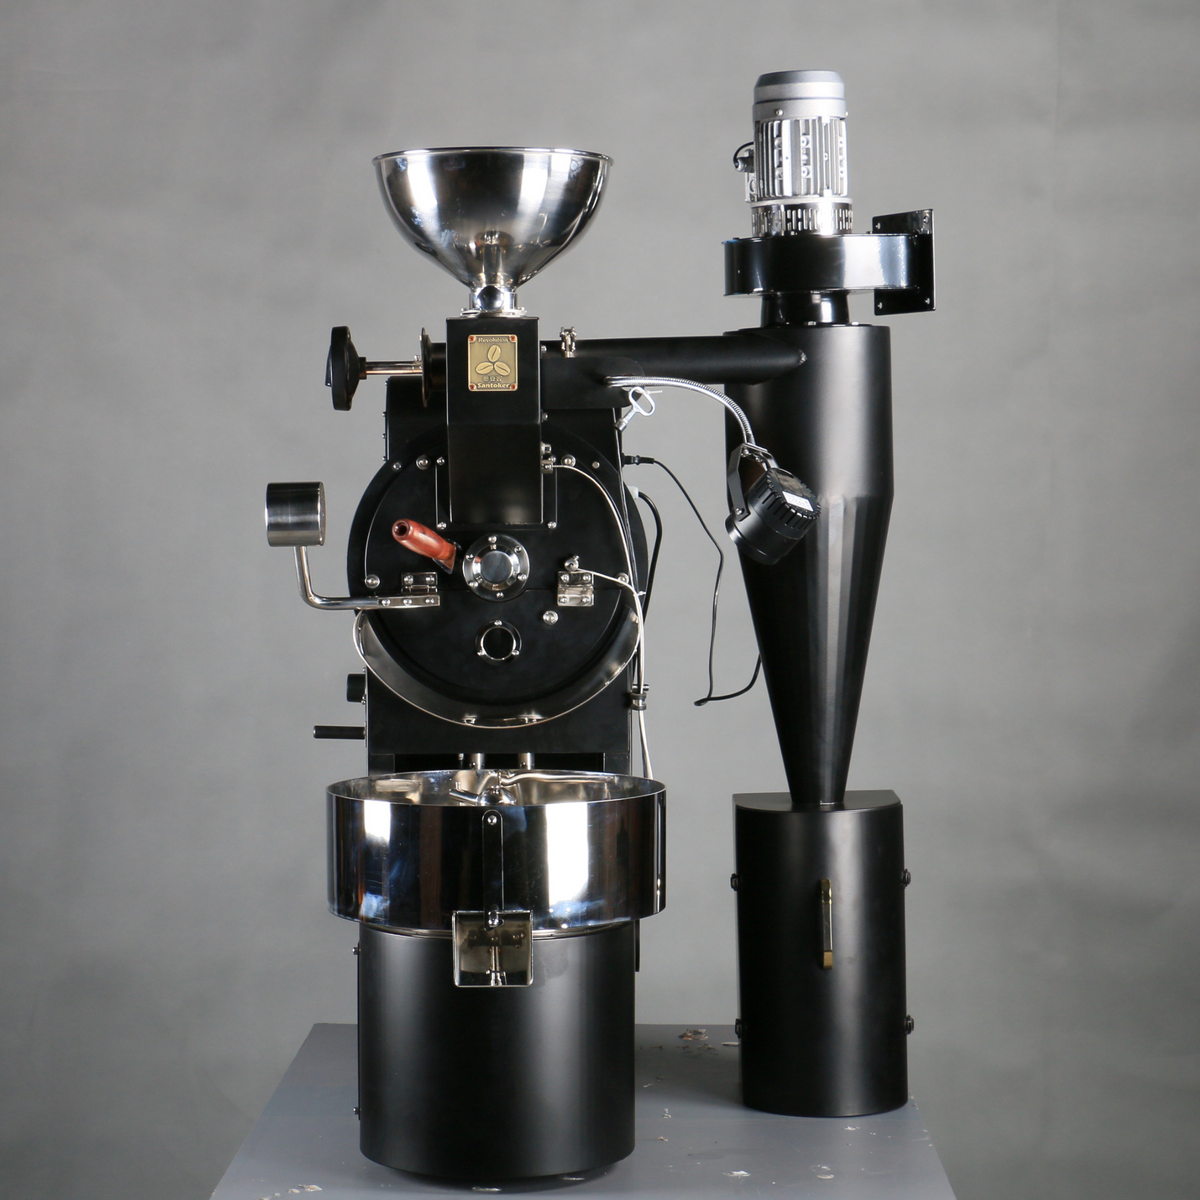 Santoker R1.5 Pro 手动咖啡烘焙机 - 2公斤/批